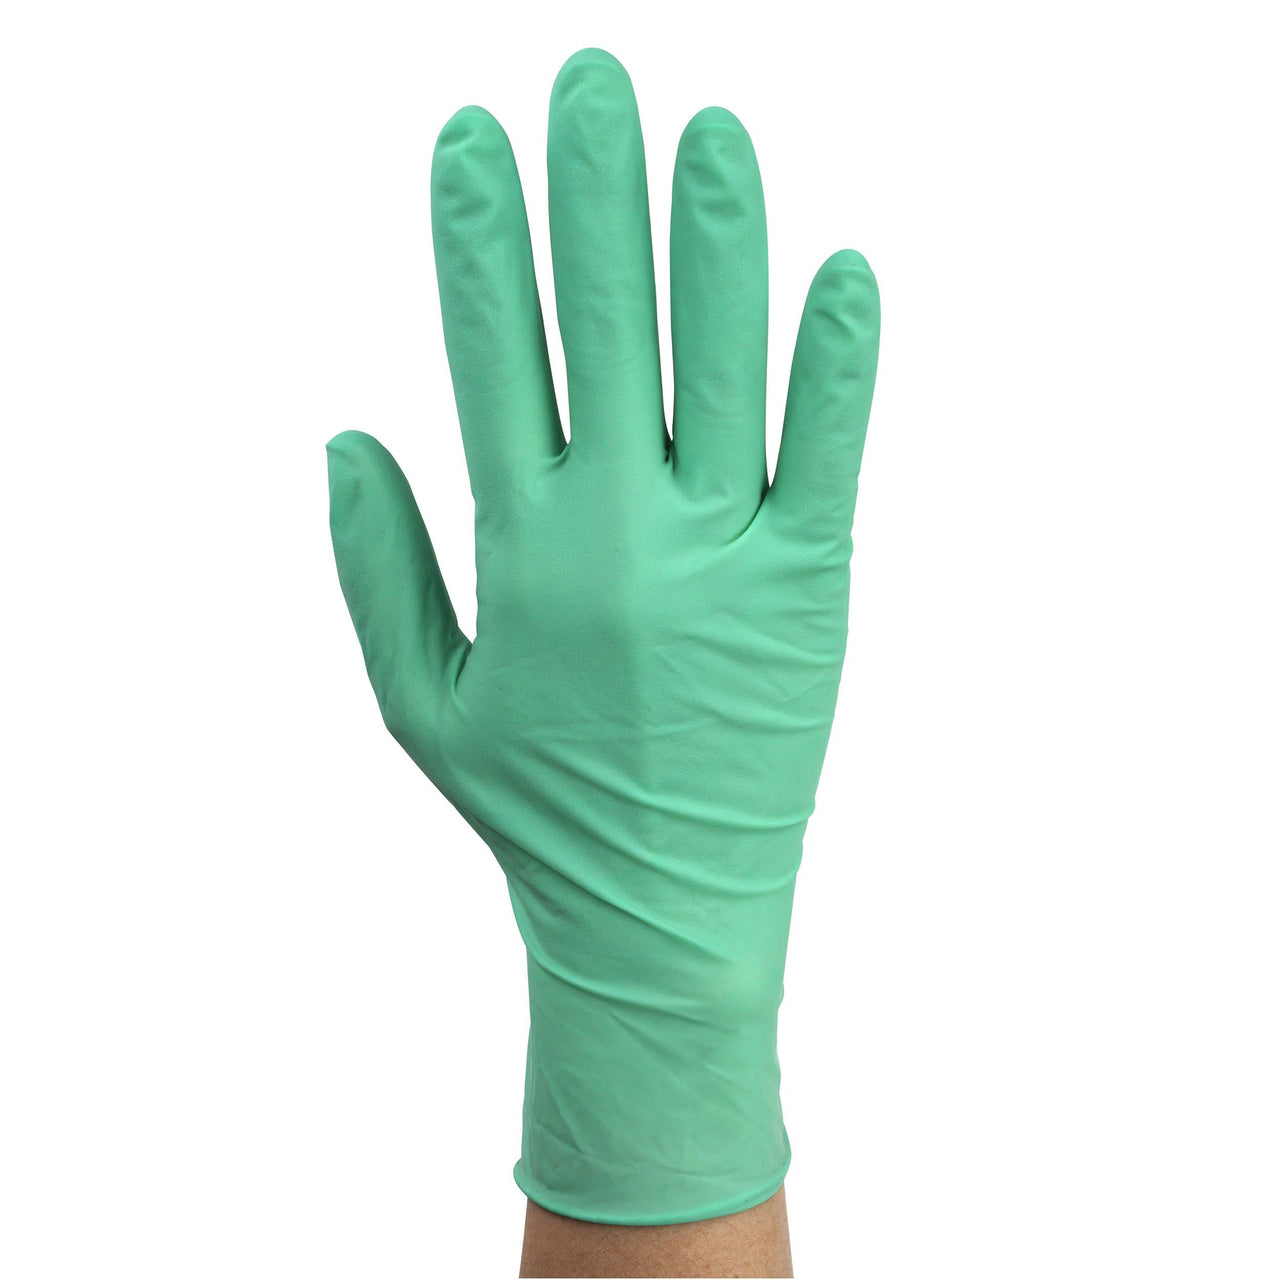 Dynarex Aloetex Latex Exam Gloves - Coated with Aloe - Senior.com Exam Gloves